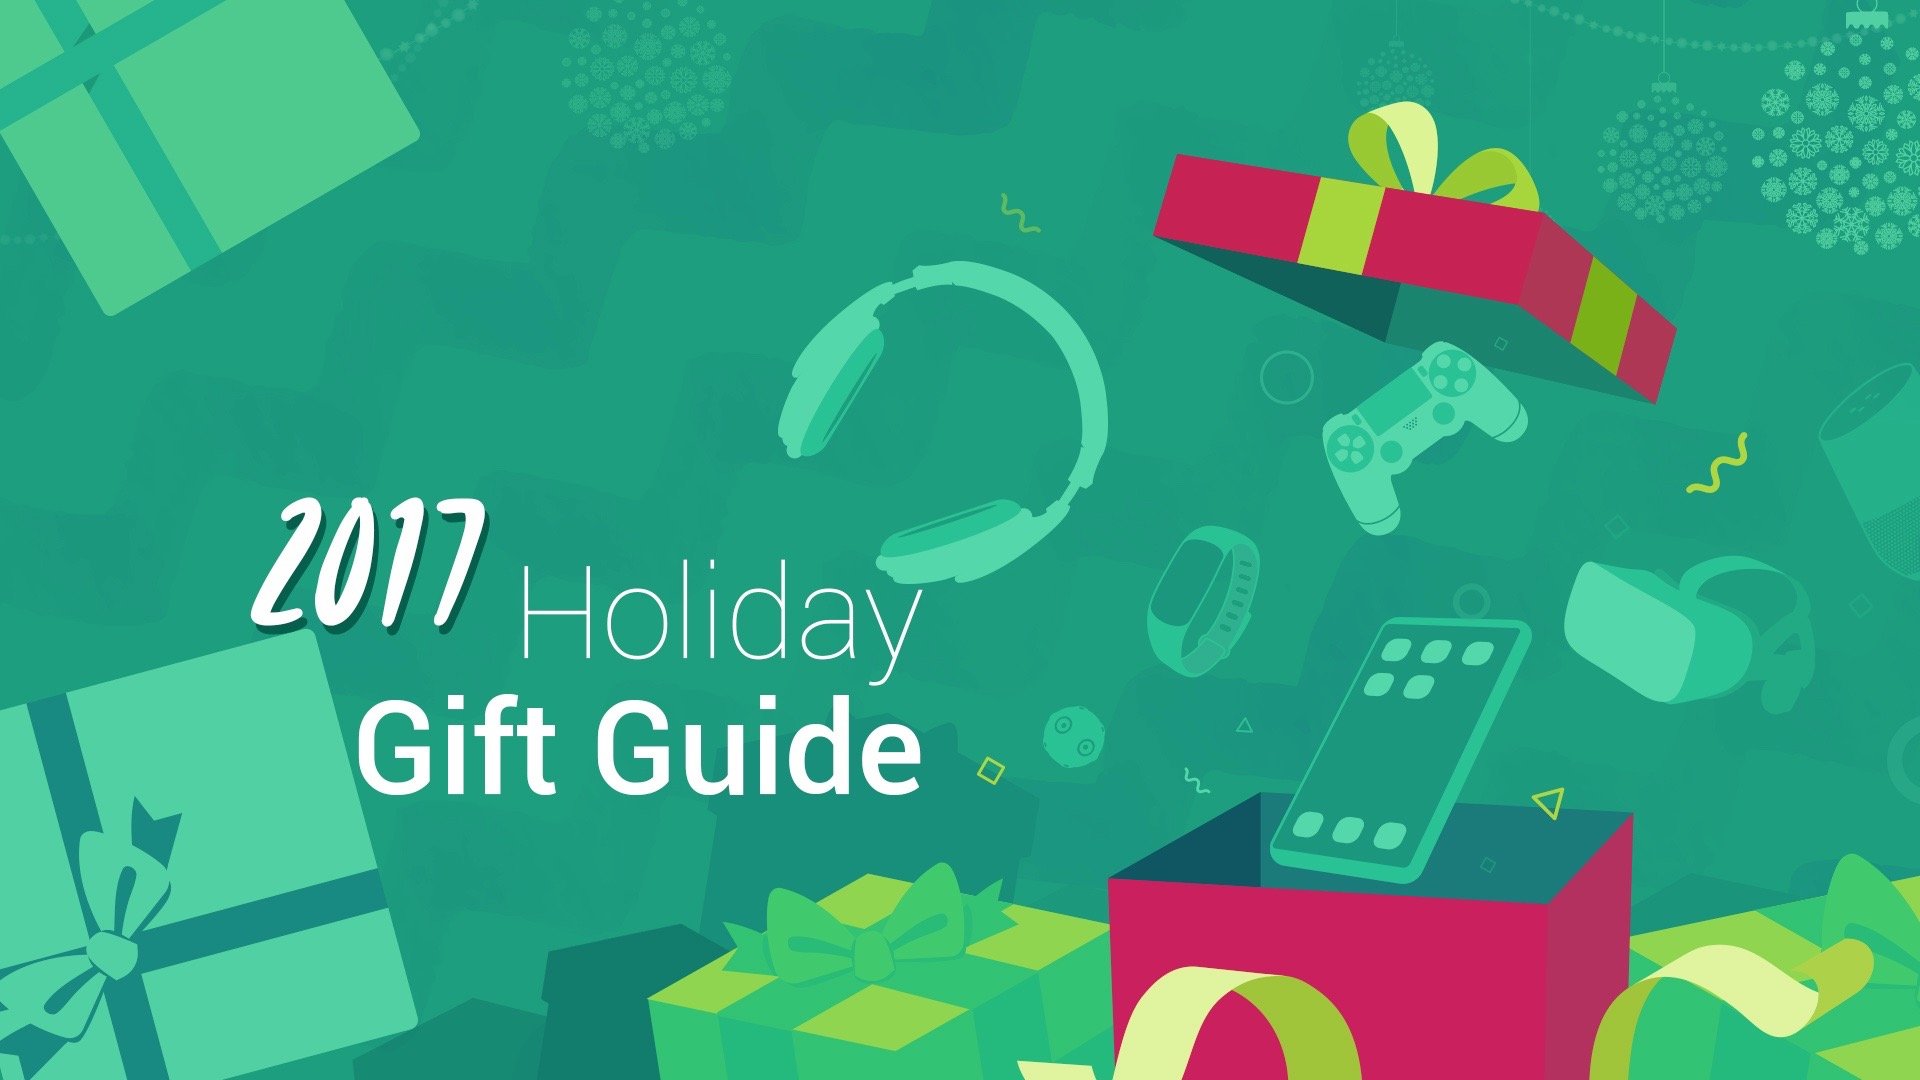 ac-gift-guide-holiday-2017.jpg?itok=JKyS